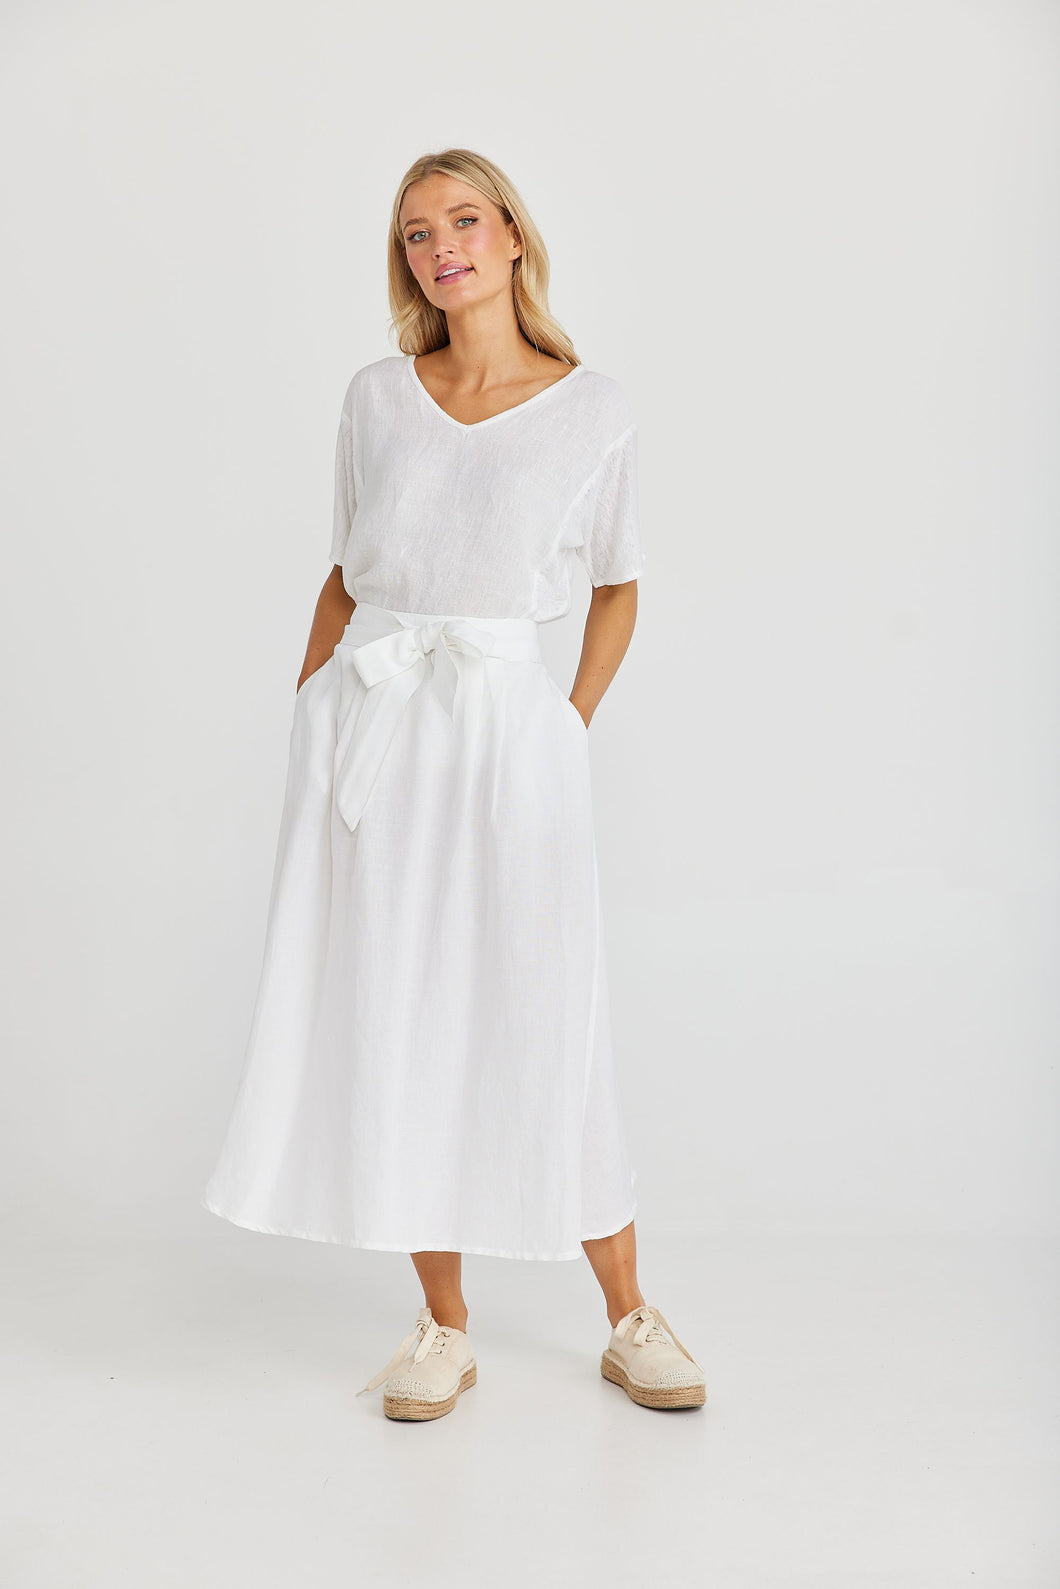 Shanty Corp - Coco Skirt, White Linen